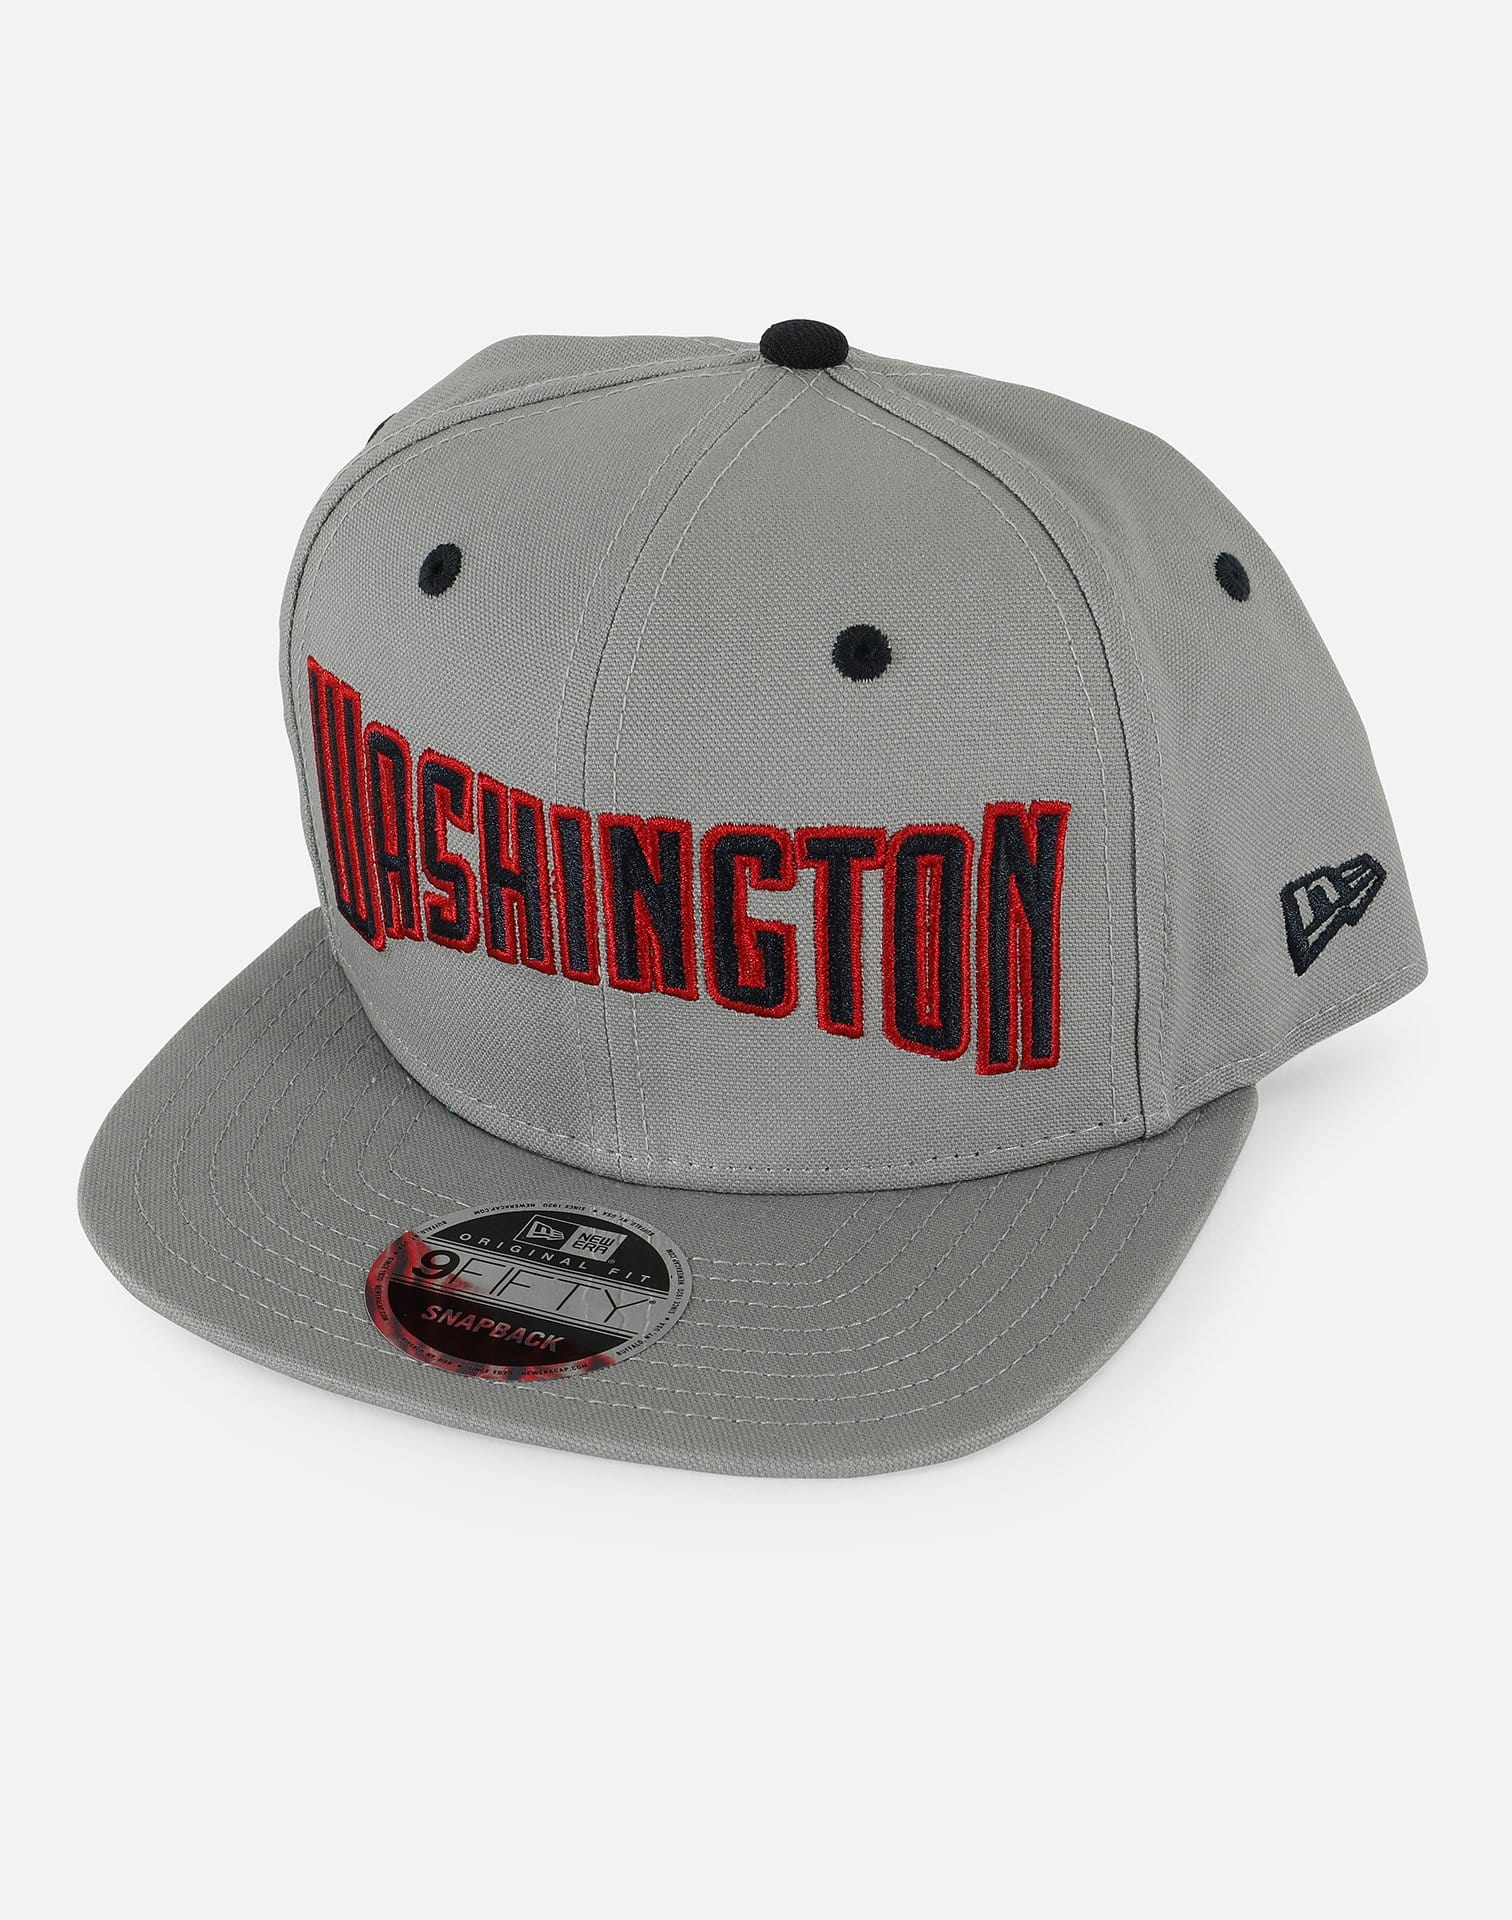 New Era NBA Washington Wizards 950 Snapback Hat